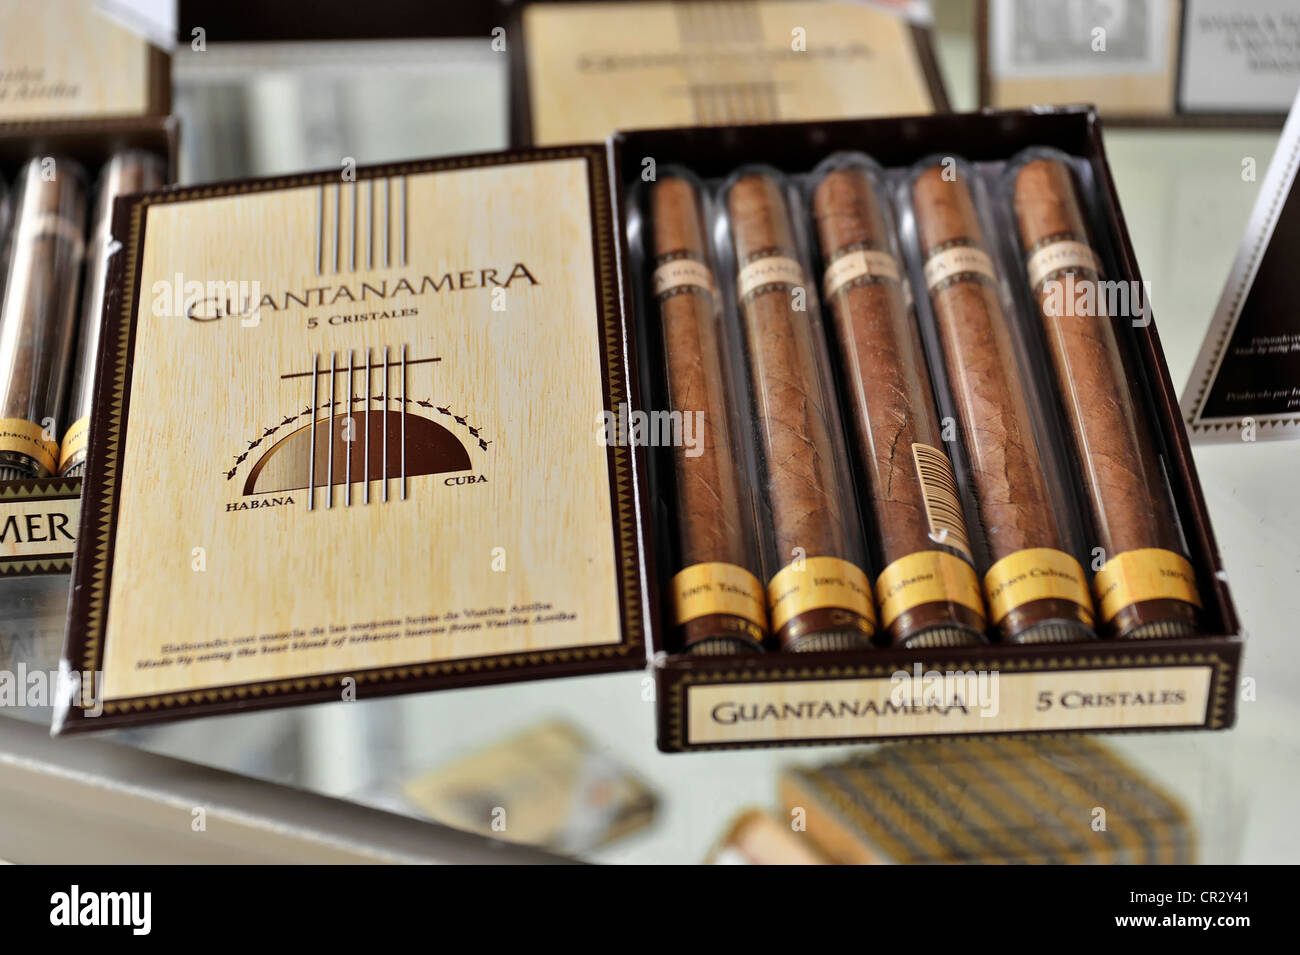 Guantanamera, original des cigares cubains, Santa Clara, Cuba, Antilles, Caraïbes, Amérique Centrale, Amérique Latine Banque D'Images